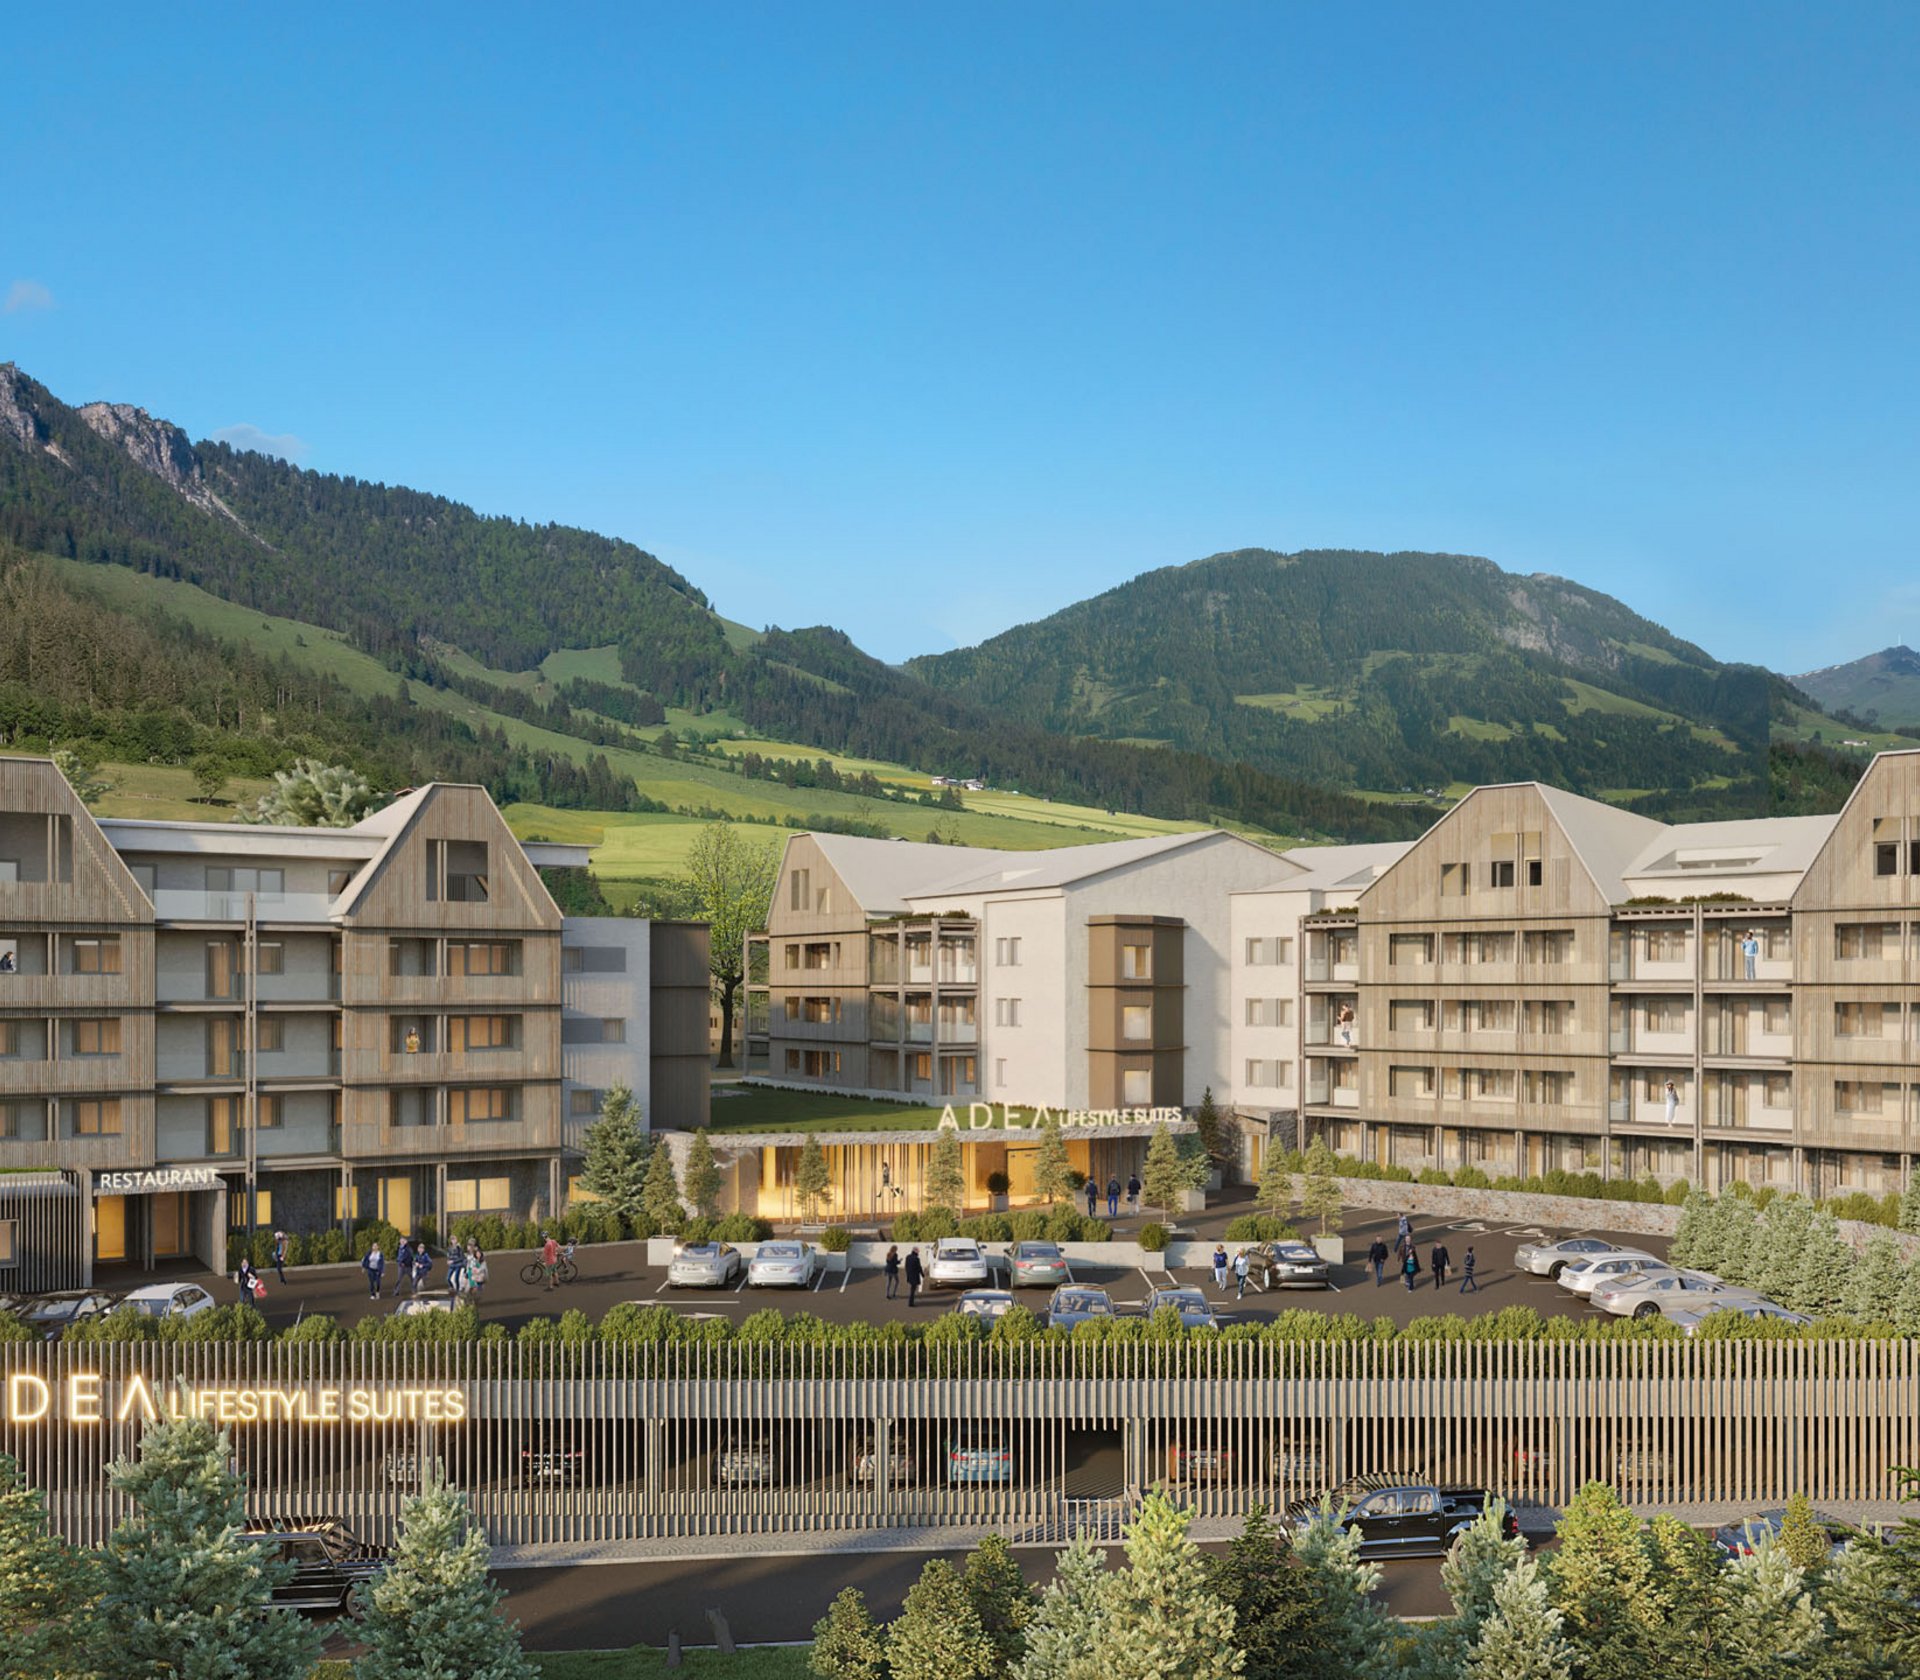 ADEA Lifestyle Suites Fieberbrunn in Tyrol, Austria